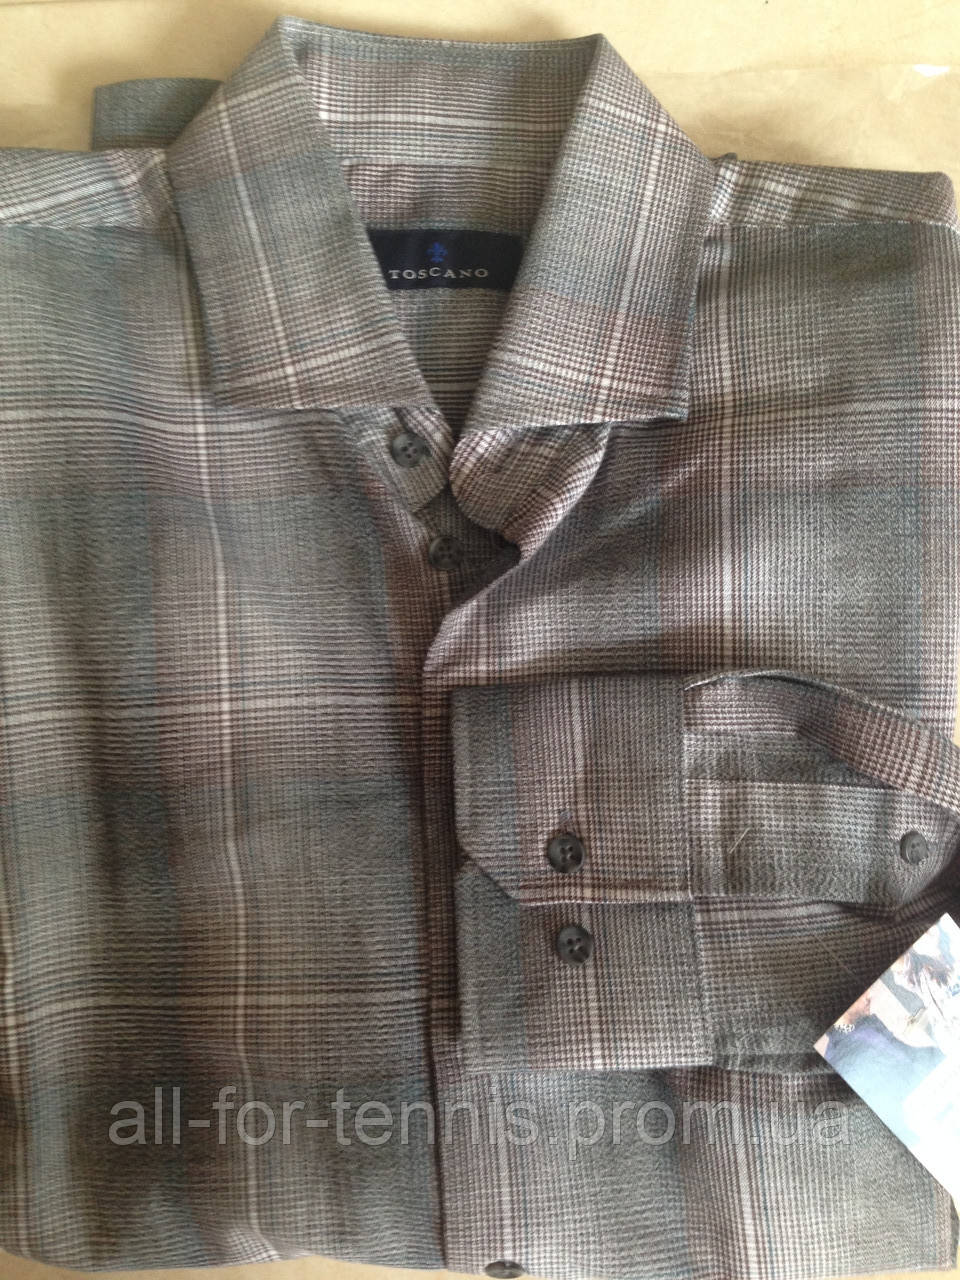 

Мужская рубашка с длинным рукавом Toscano NEW Gray Mens Long-Sleeve Button Down Plaid Shirt оригинал (size M)